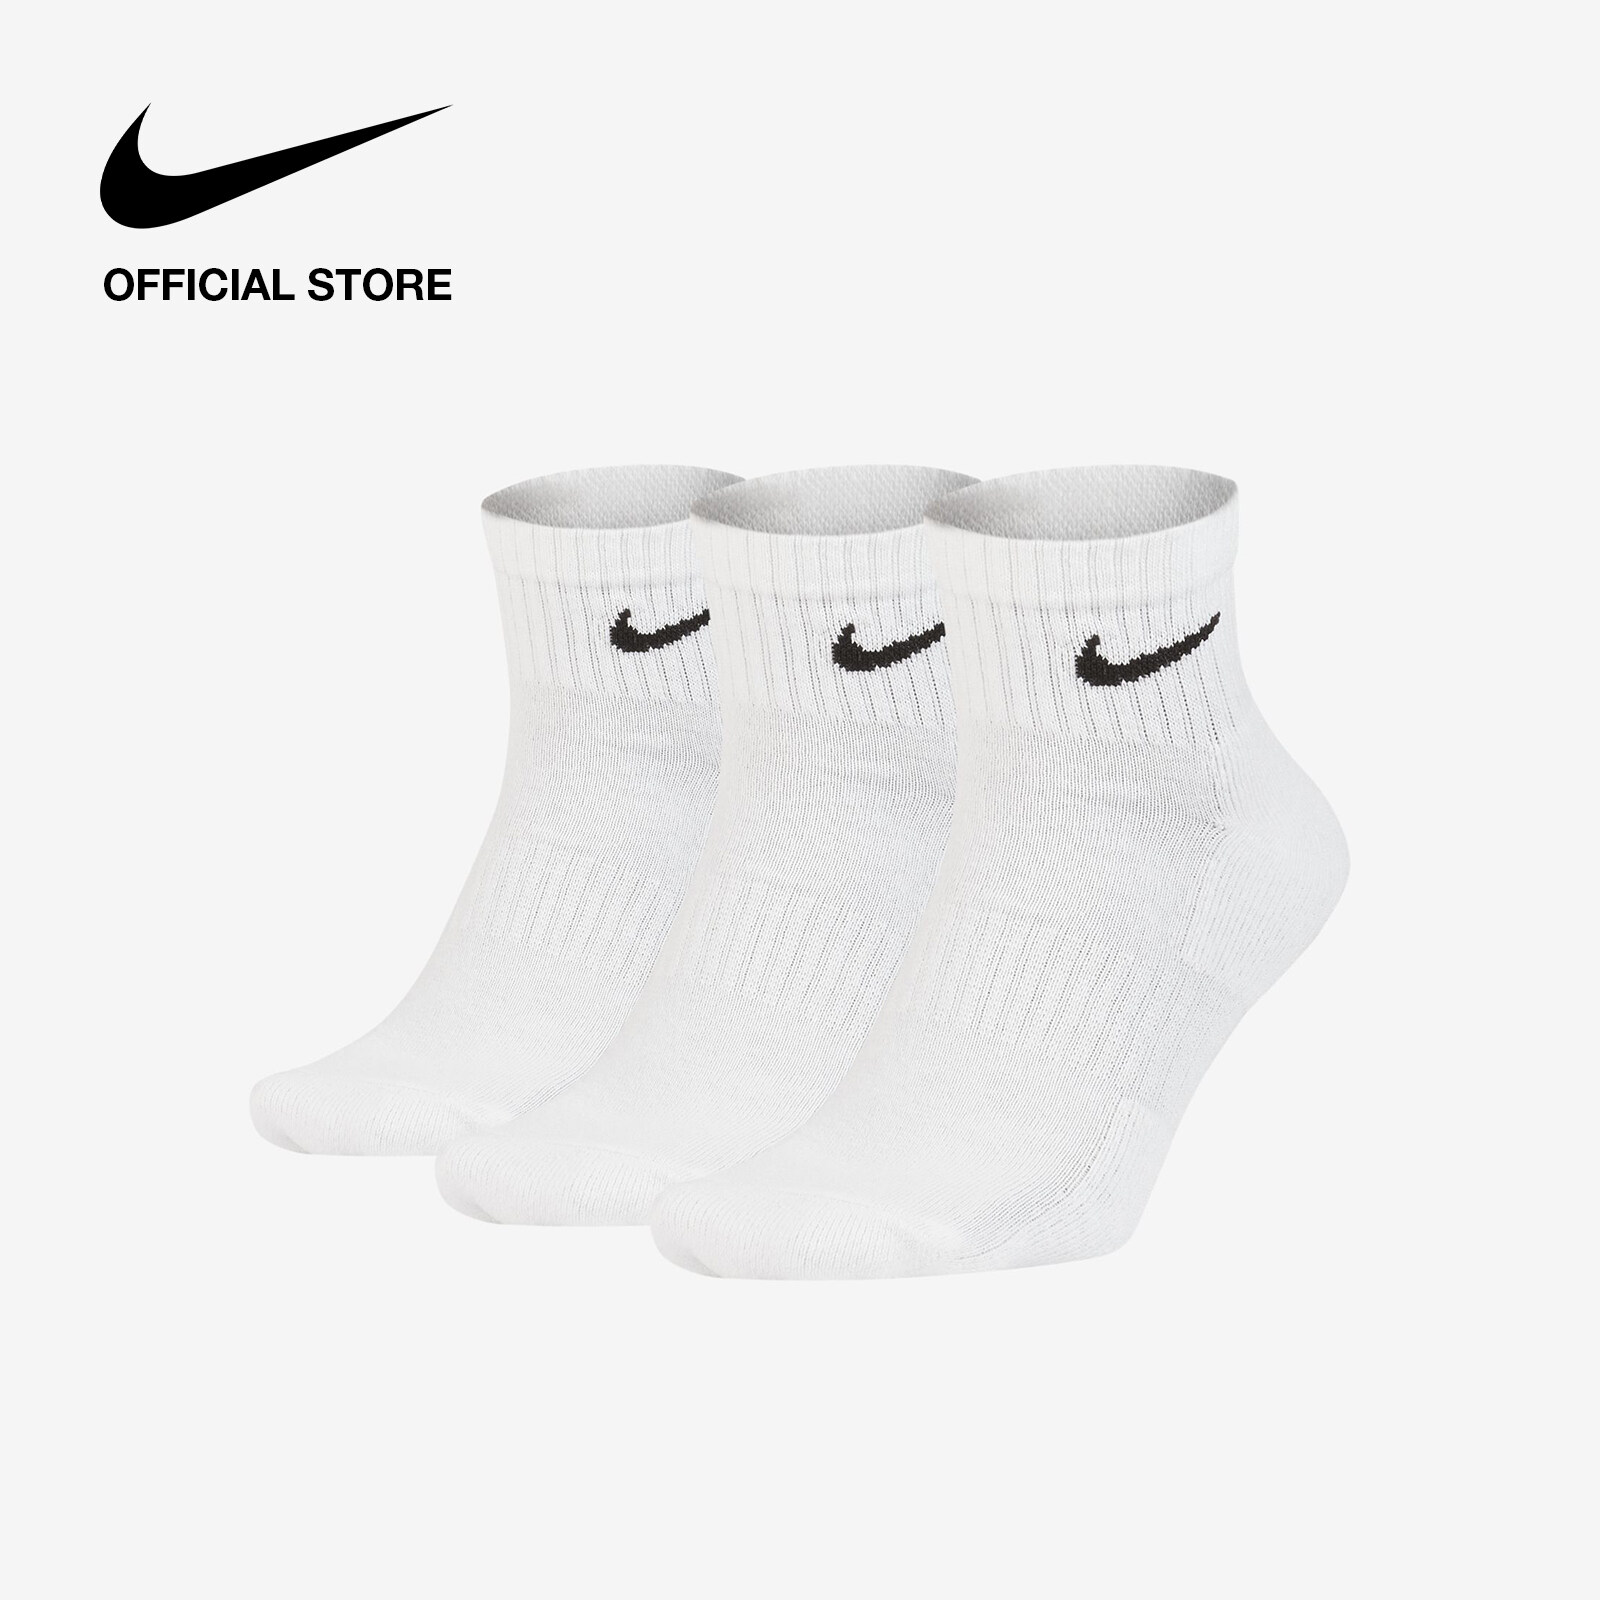 Nike Men's Everyday Cushioned Training Ankle Socks (3 Pairs) - White ไนกี้ ถุงเท้าเทรนนิ่งหุ้มข้อ (3 คู่)ผู้ชาย - สีขาว